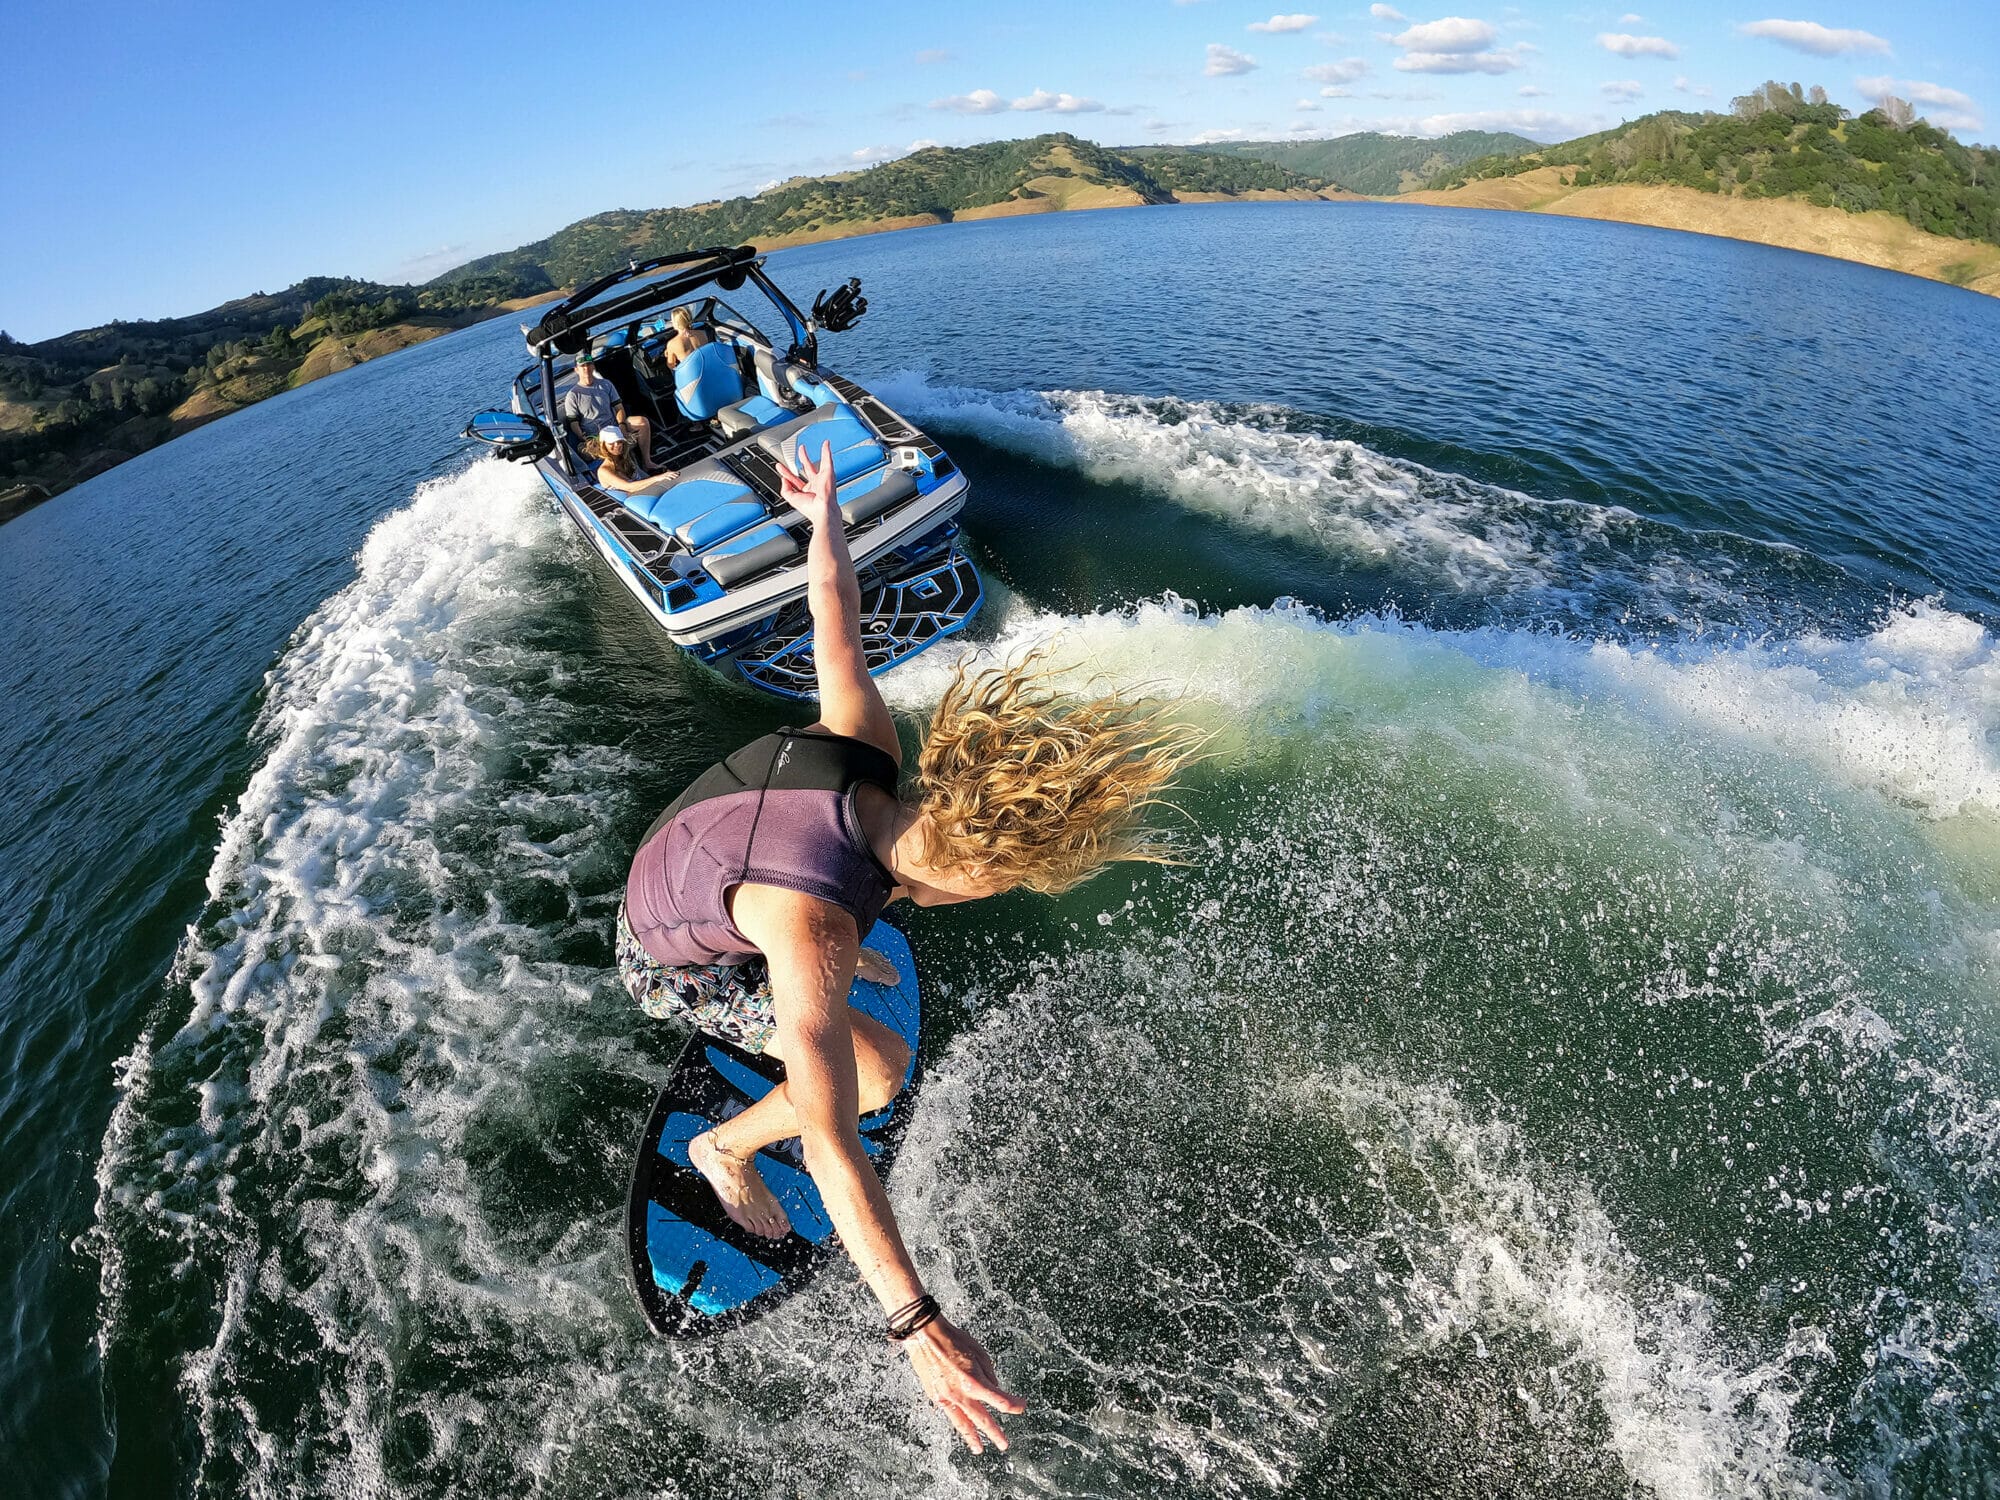 A woman riding a wakesurf board on a lake.